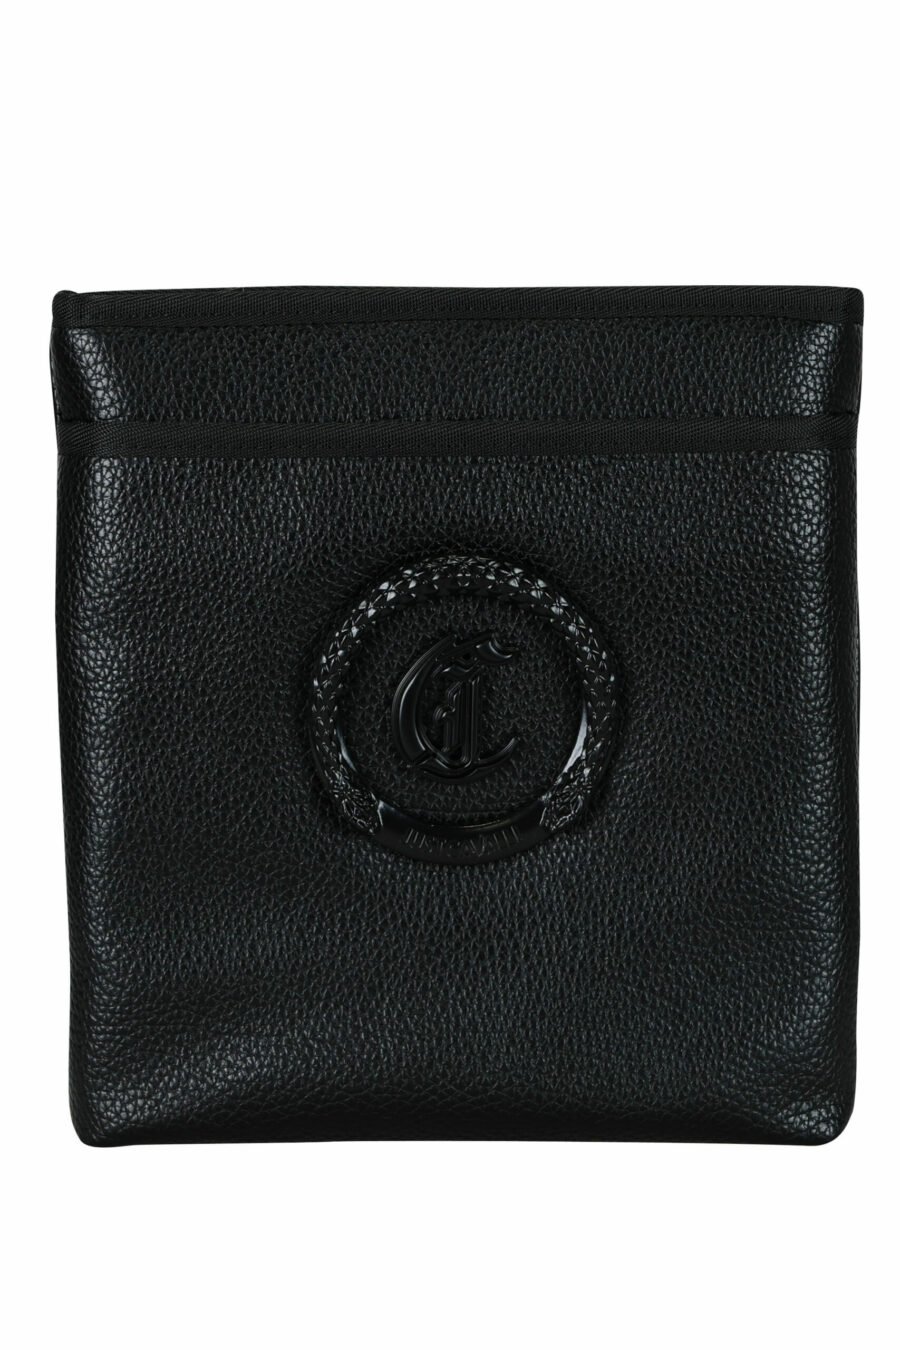 Black square crossbody bag with circular metal "c" logo - 8052672641281 scaled